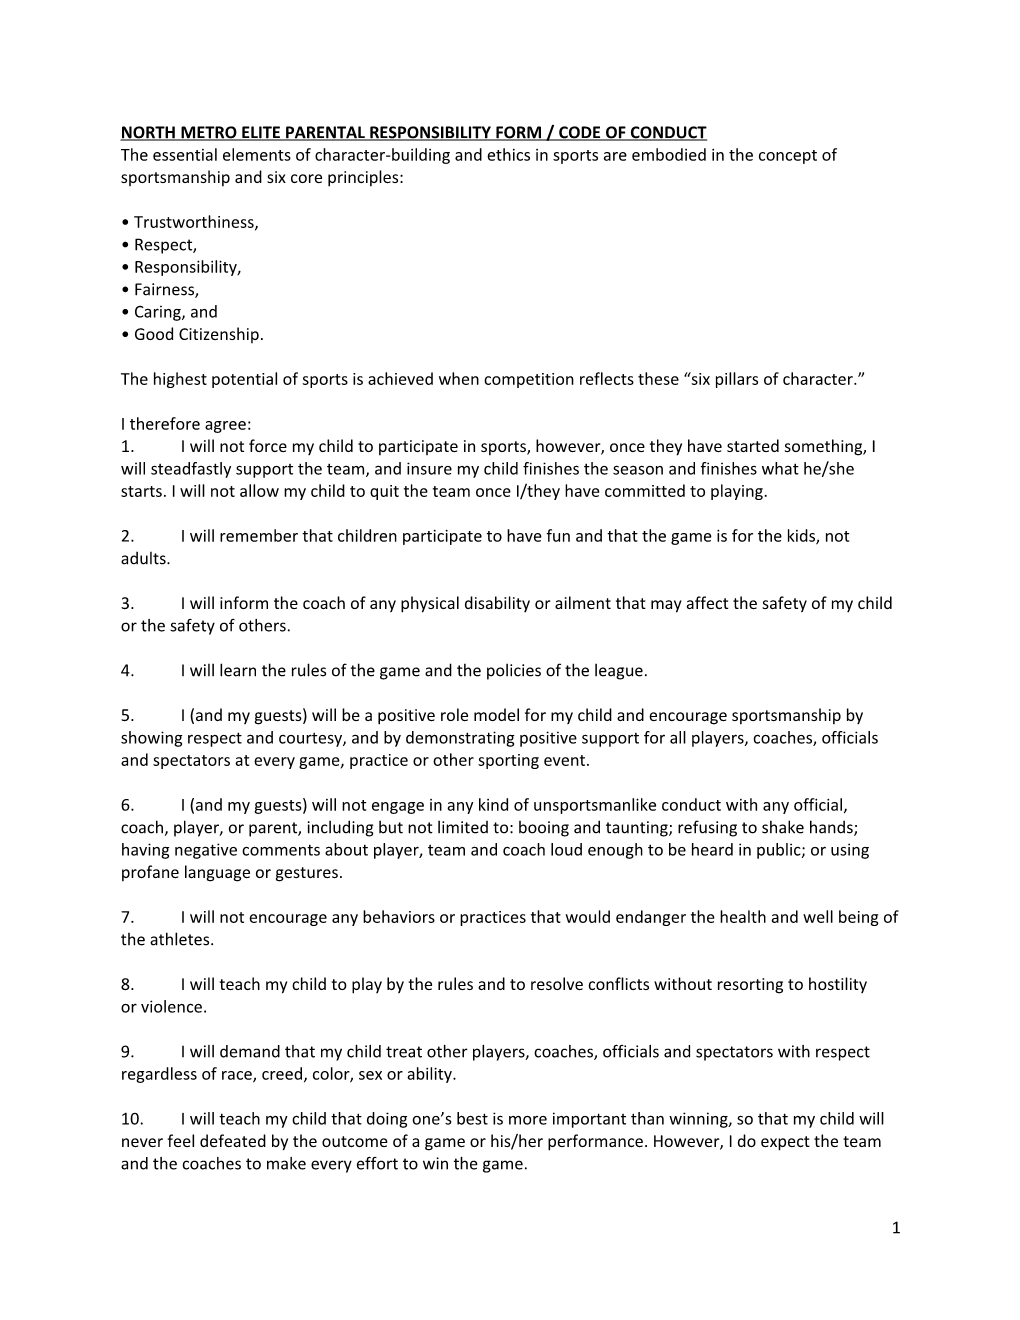 North Metro Elite Parental Responsibility Form / Code of Conduct